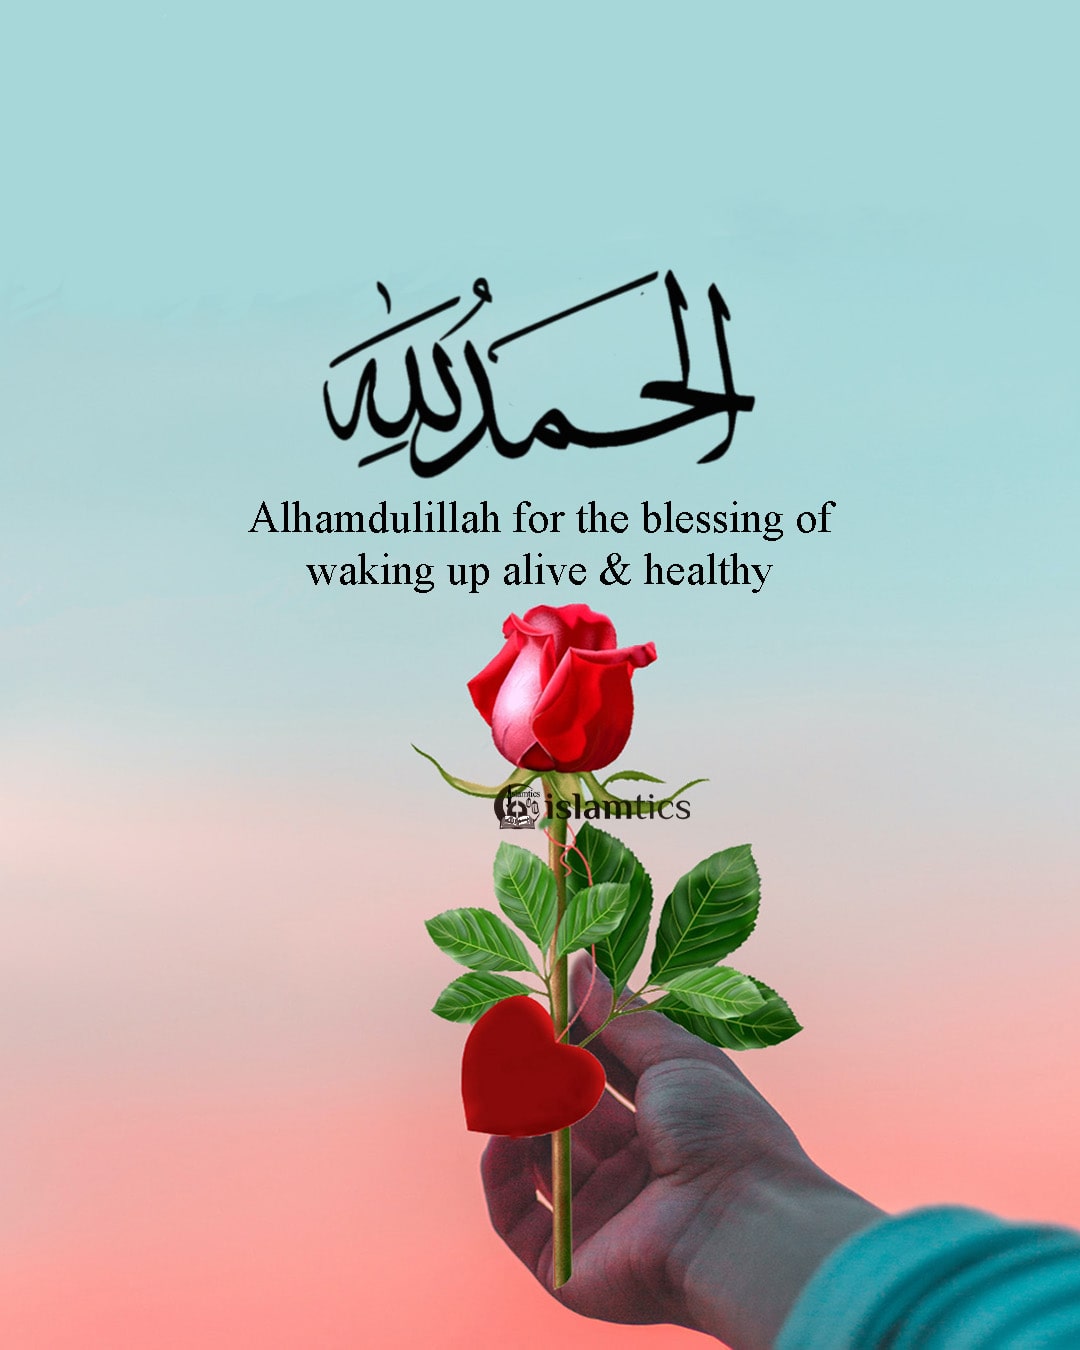 Alhamdulillah for waking up alive & healthy | islamtics